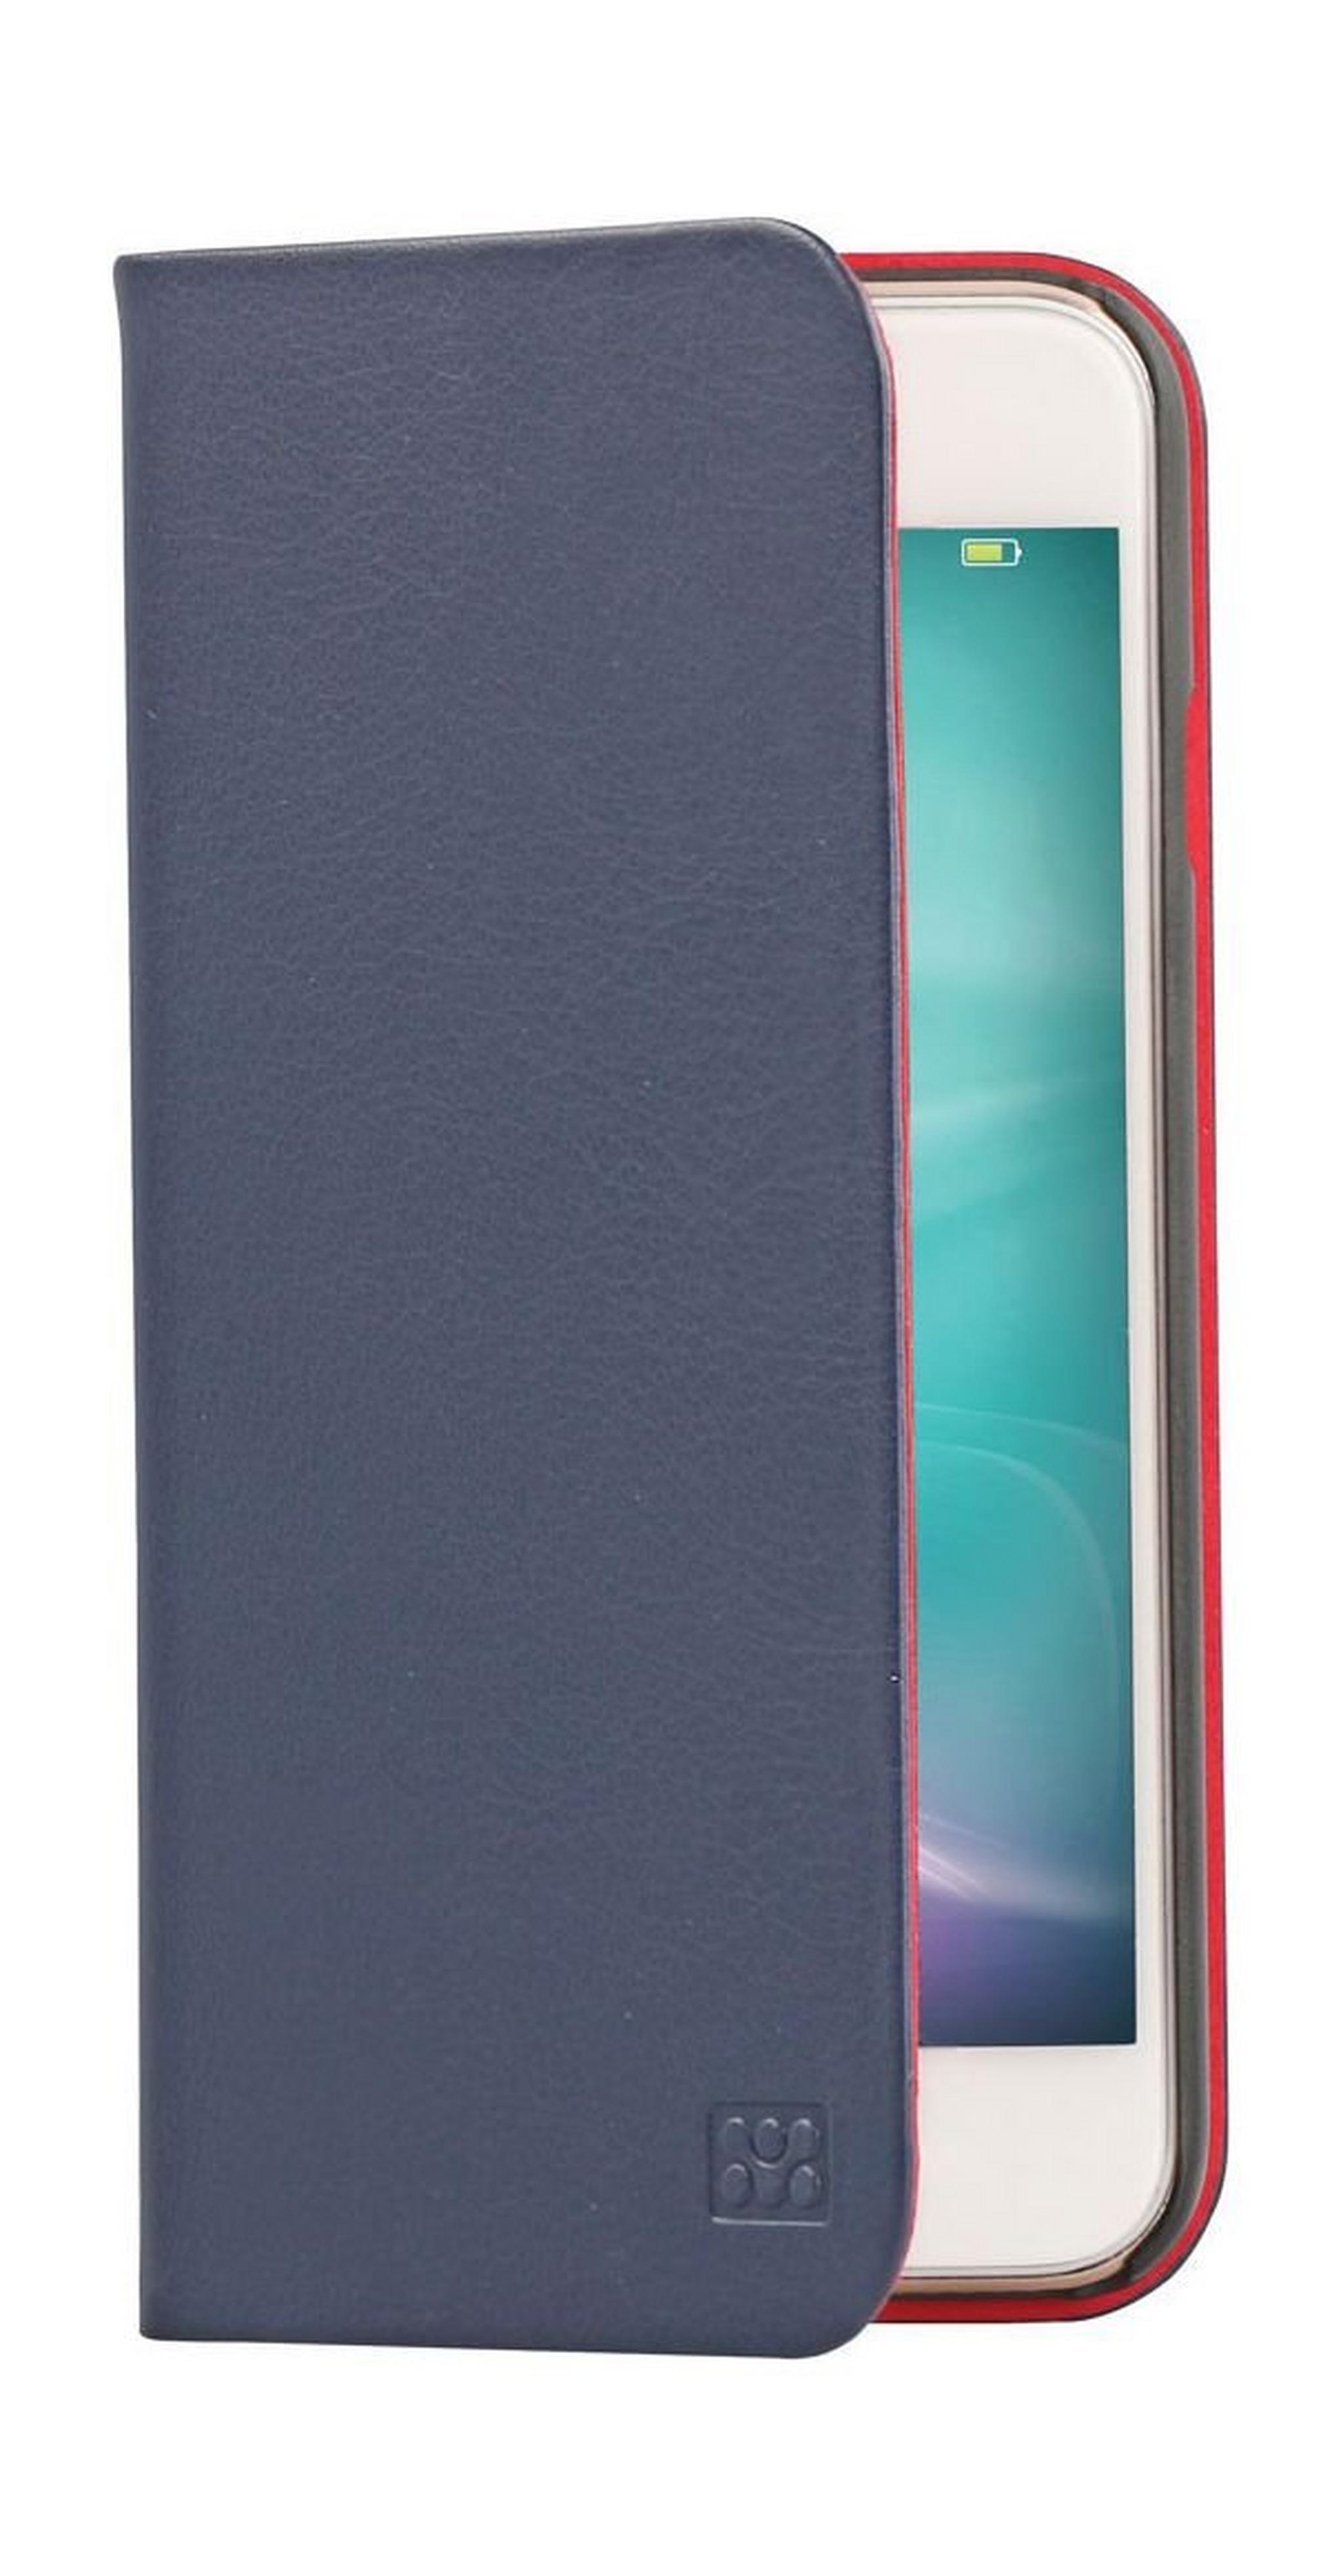 Promate Ultra-Slim Leather Folio Case for iPhone 6 Plus - Blue